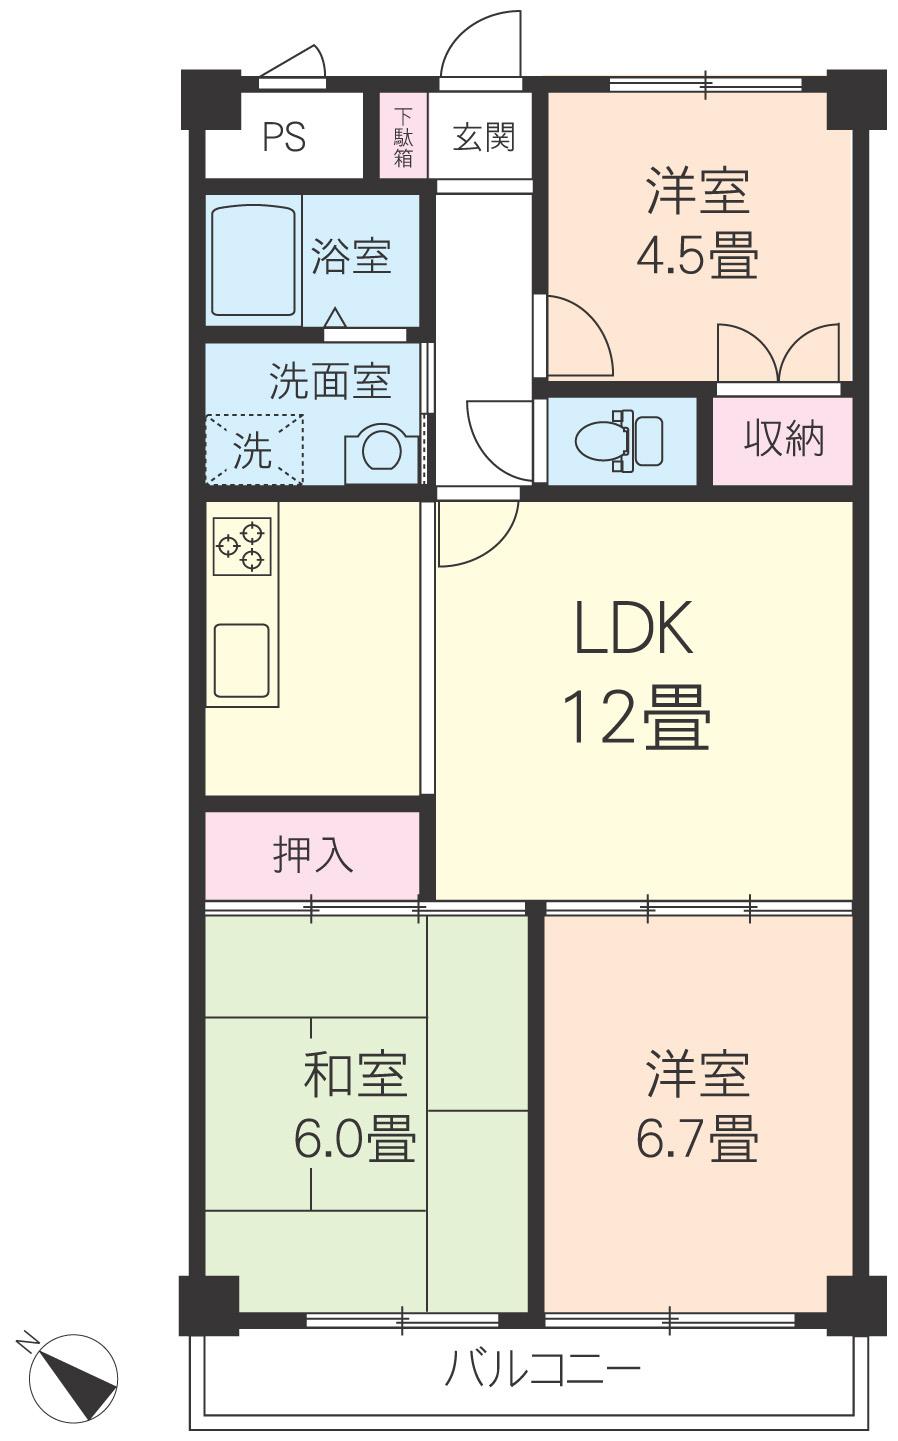 Floor plan. 3LDK, Price 4.9 million yen, Occupied area 64.03 sq m , Balcony area 6.72 sq m